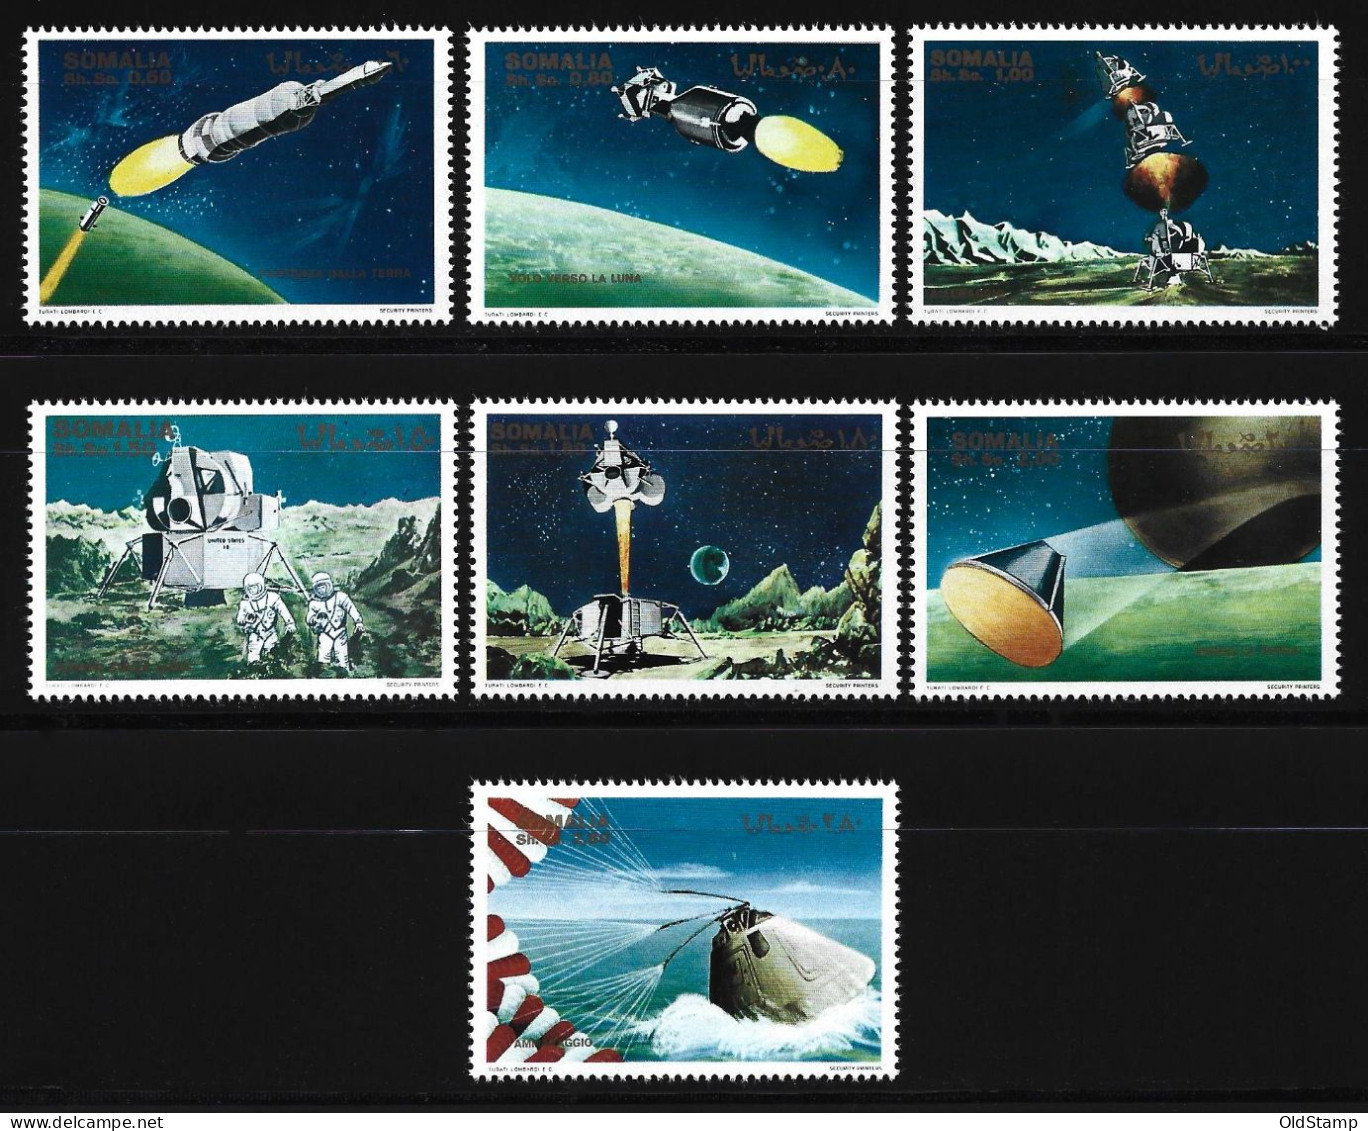 Somalia SPACE SPACESHIP PLANET ASTRONAUT STAR MNH LUXE Africa Stamps FULL SET - Sammlungen